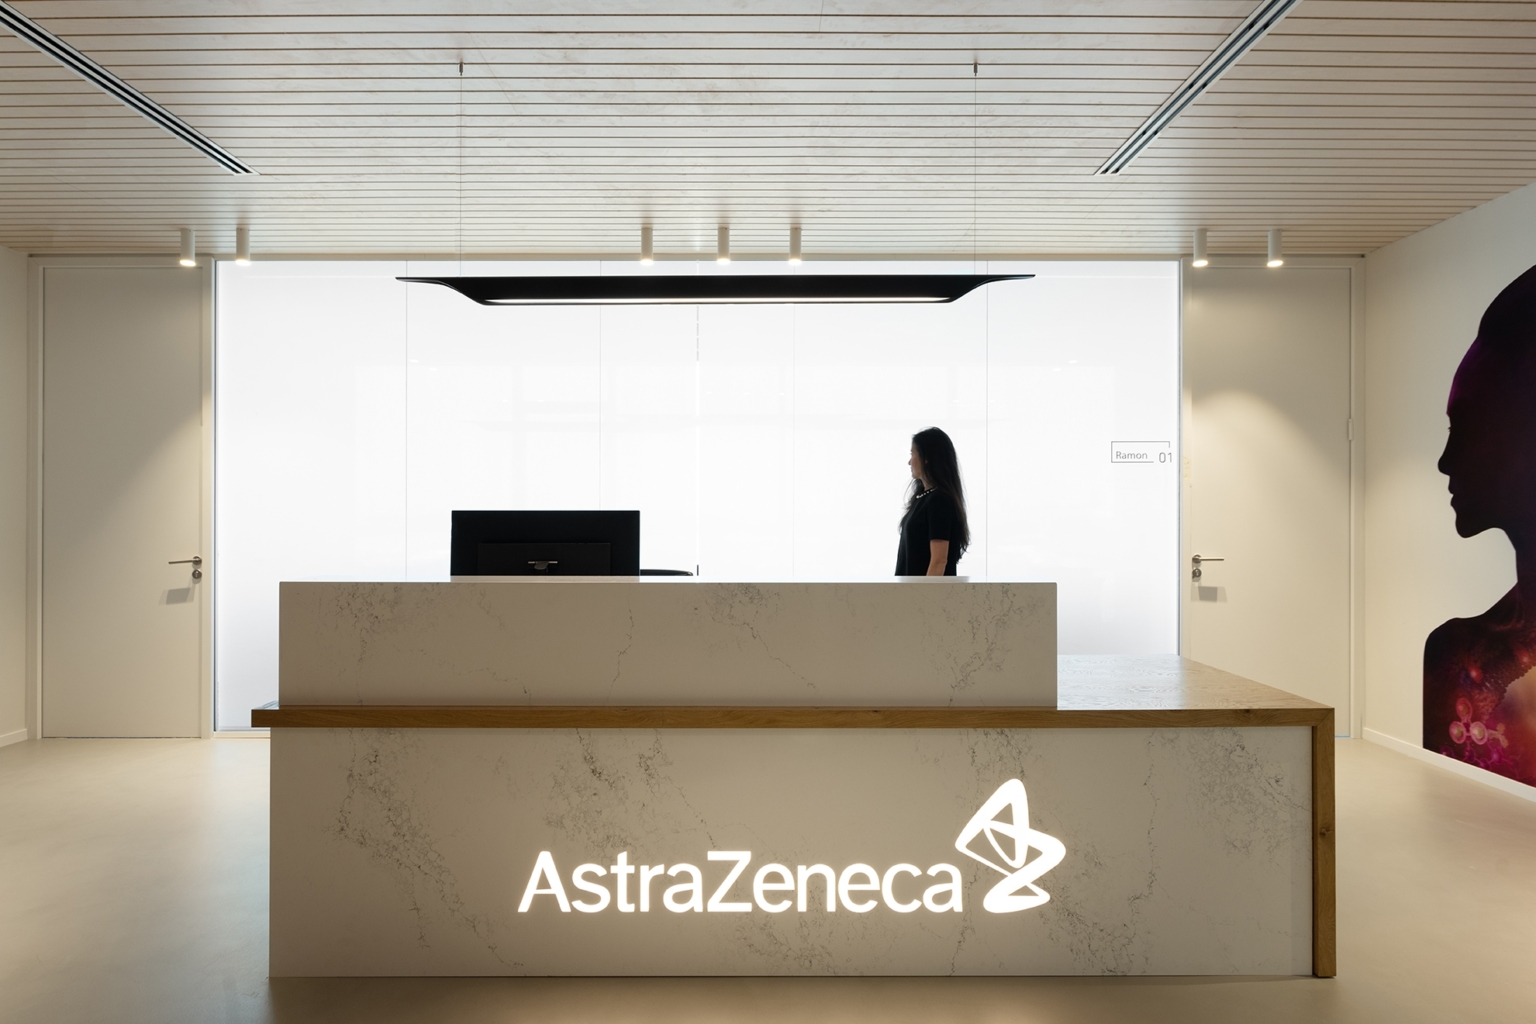 AstraZeneca(アストラゼネカ)のオフィス - イスラエル, ケファル サヴァの受付/エントランススペース